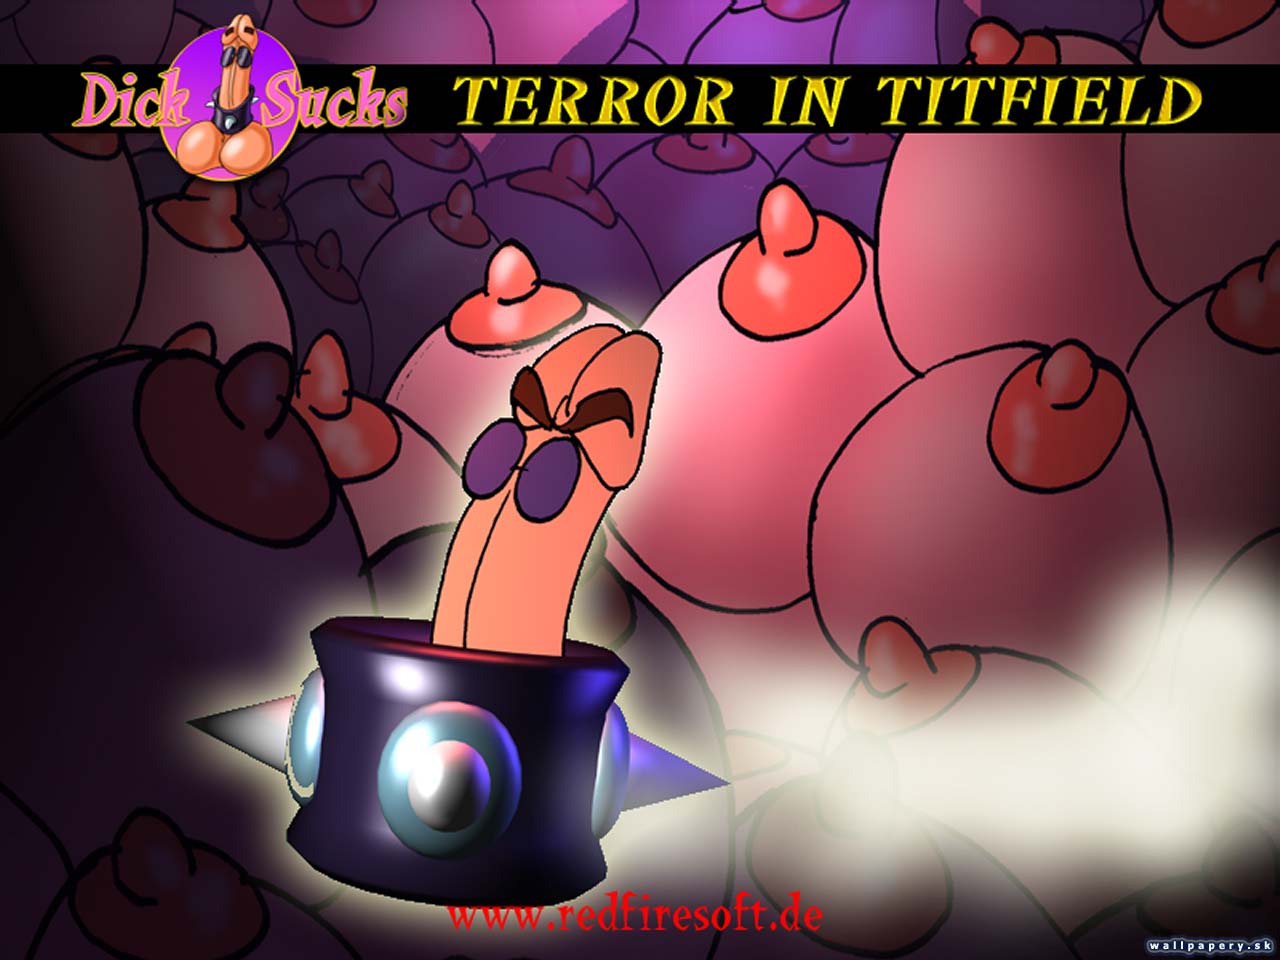 Dick Sucks: Terror In Titfield - wallpaper 4